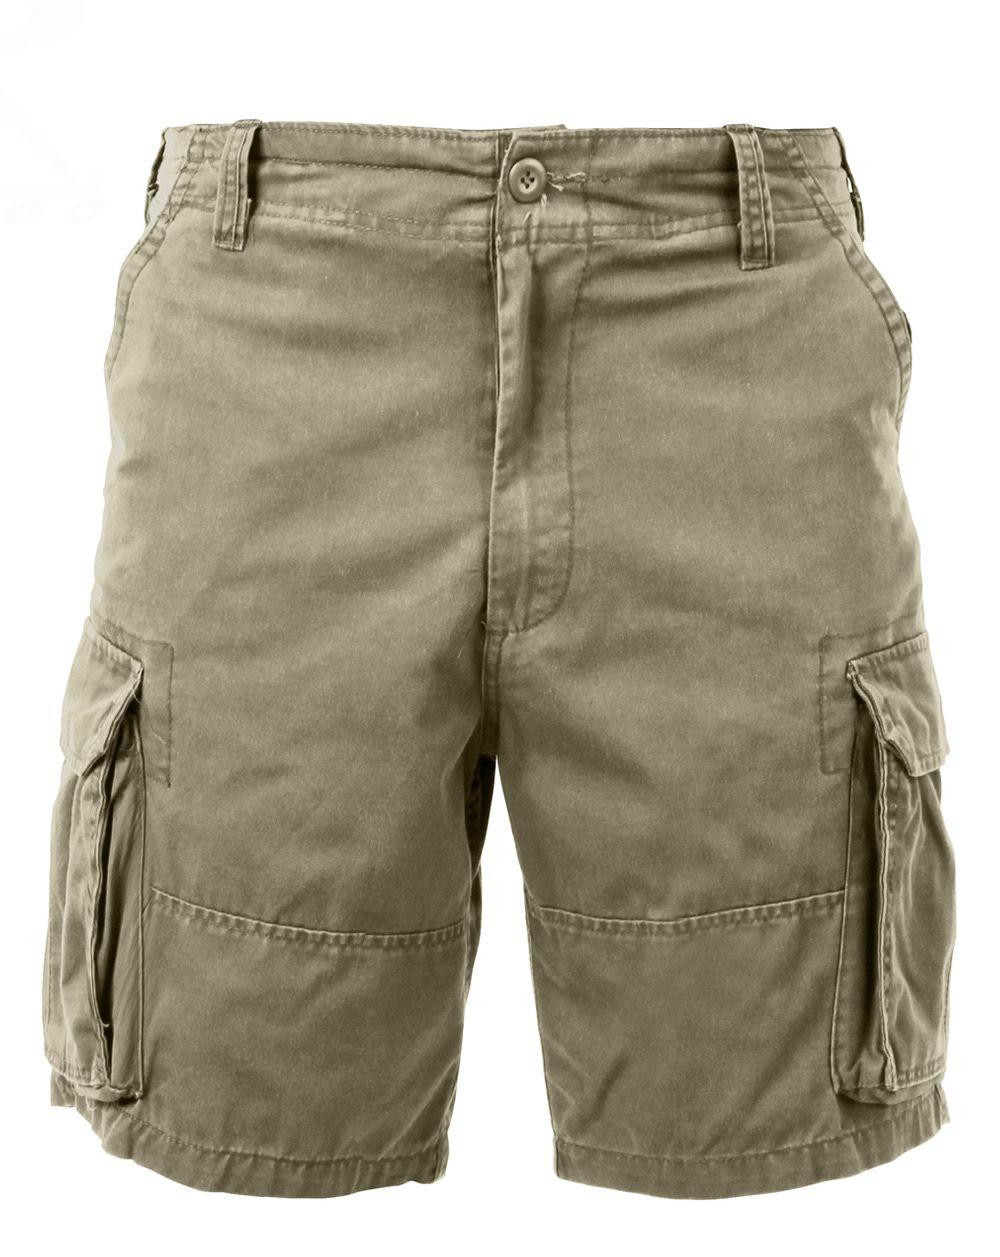 Rothco Cargo shorts (Khaki, M)